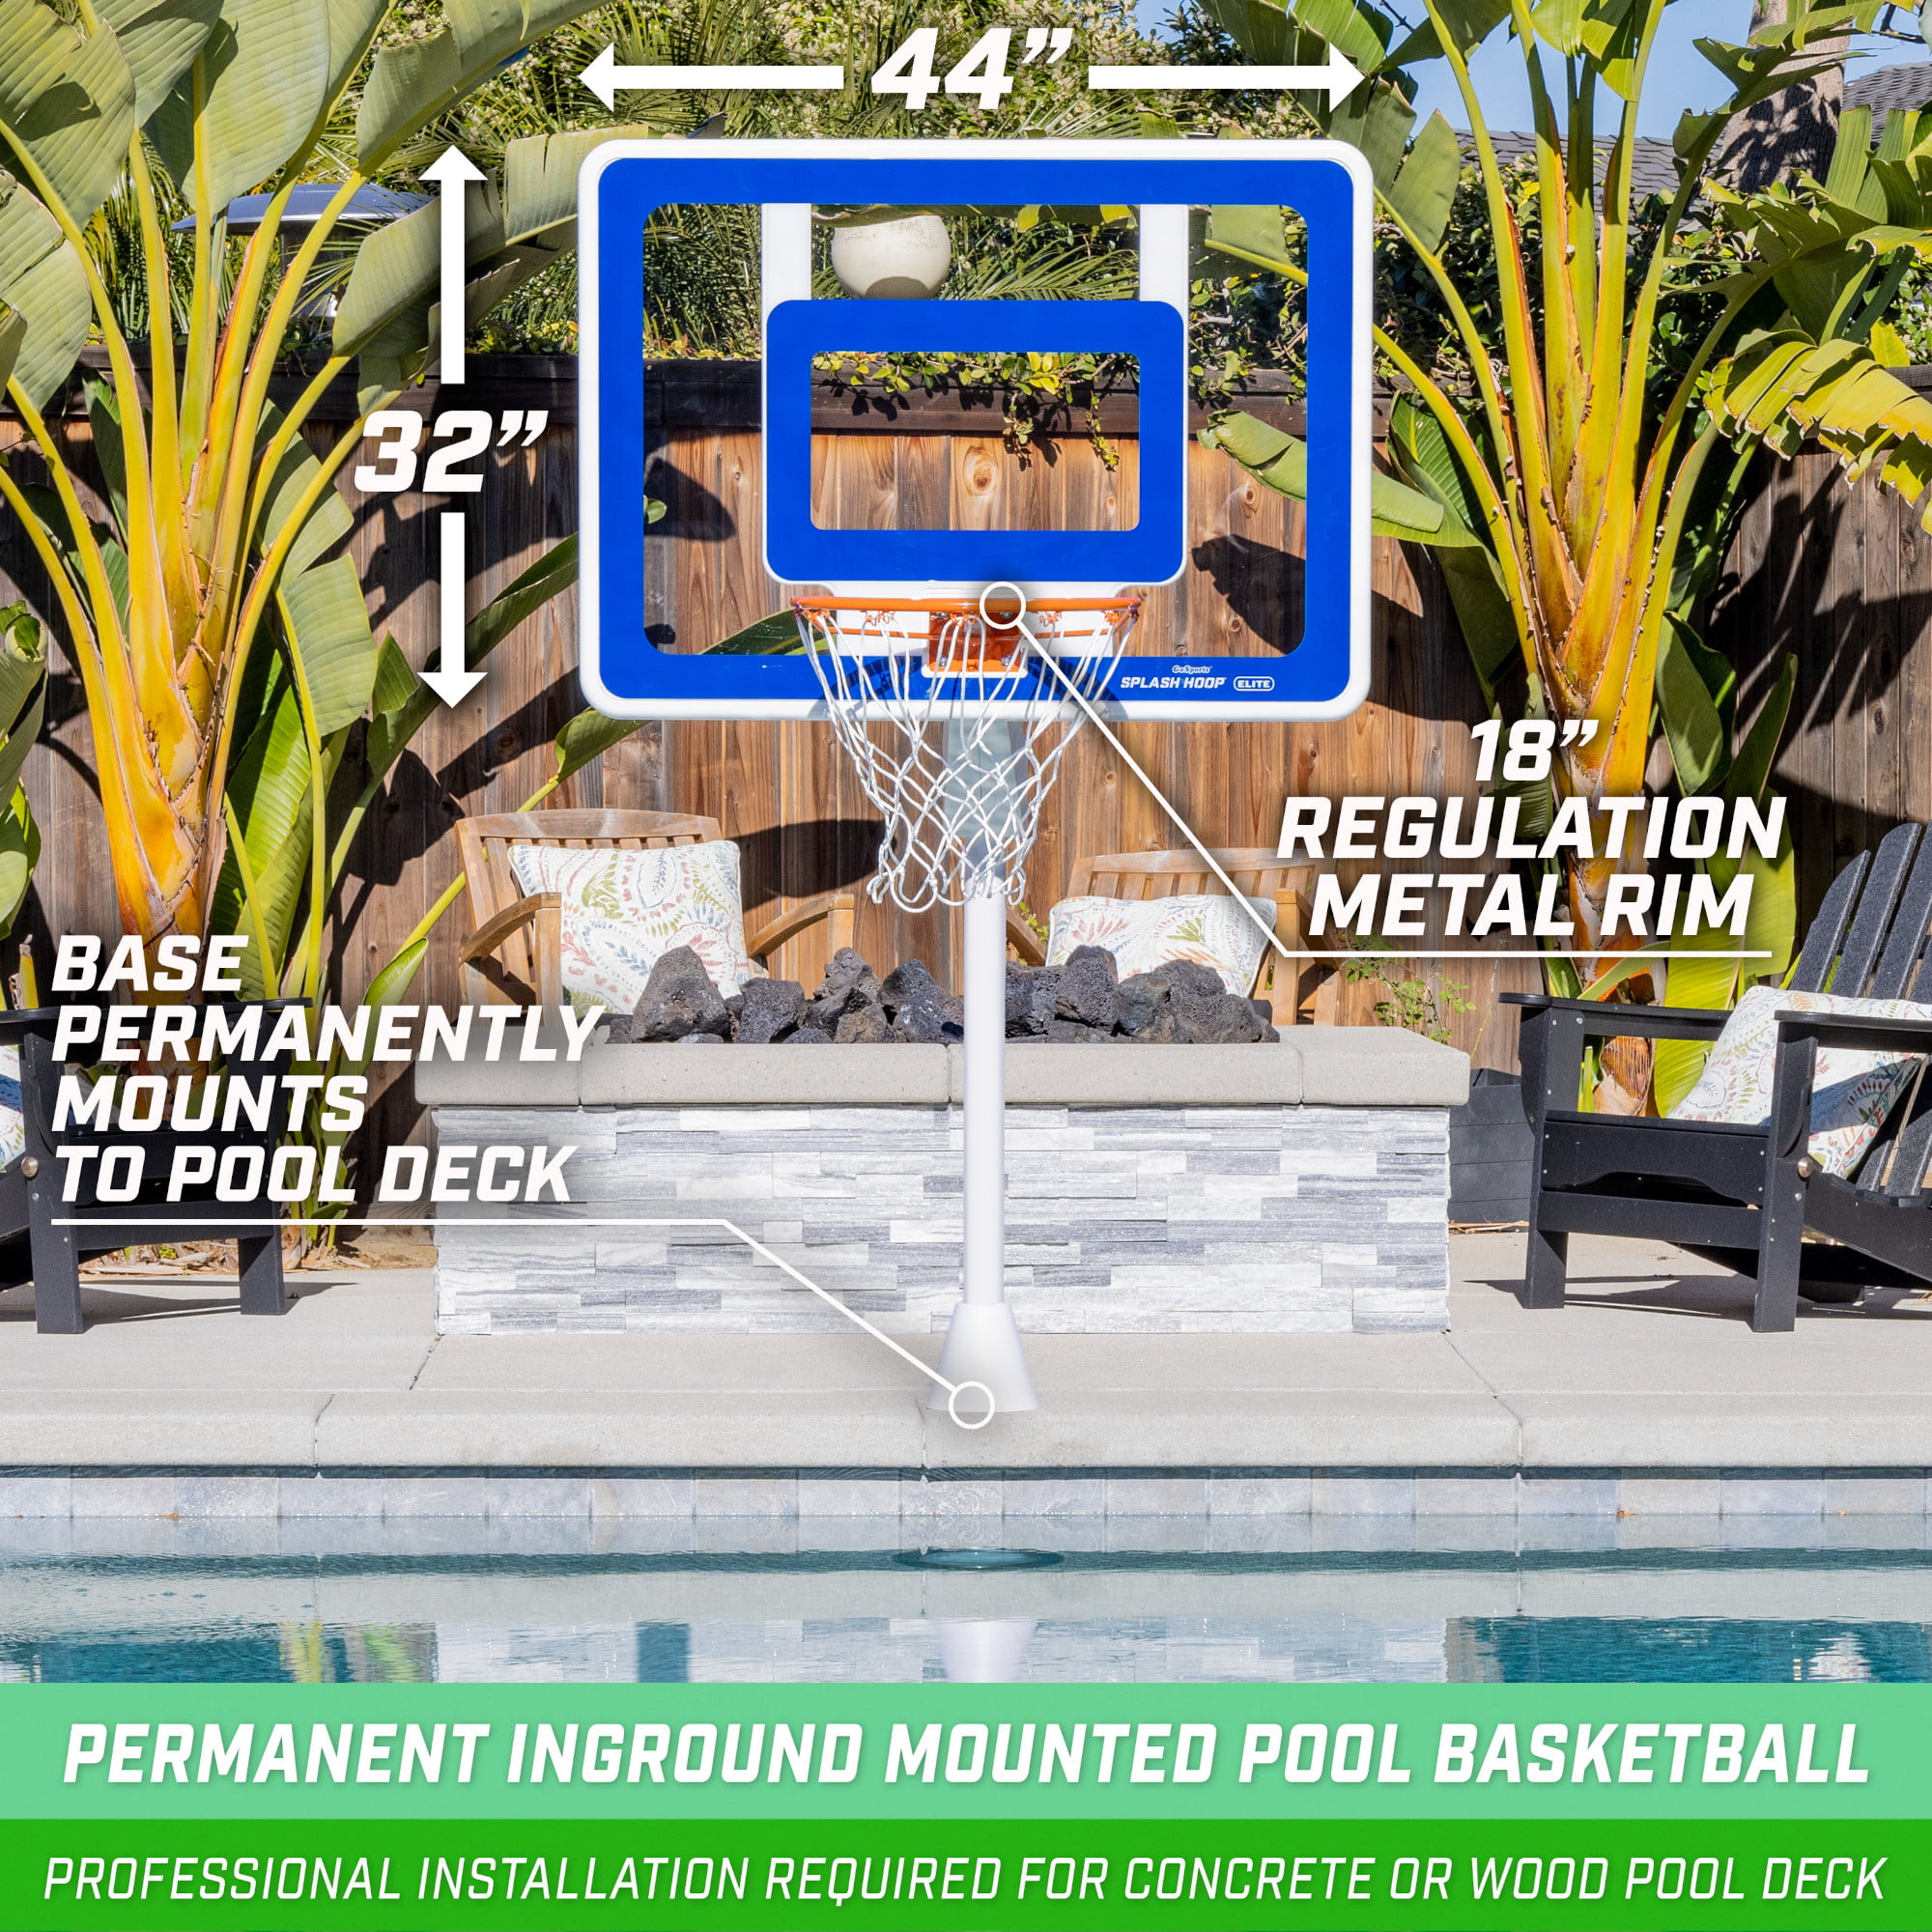 GoSports Deck-Mounted Splash Hoop ELITE Adjustable Height Inground Pool Basketball Game with Regulation Rim - 1